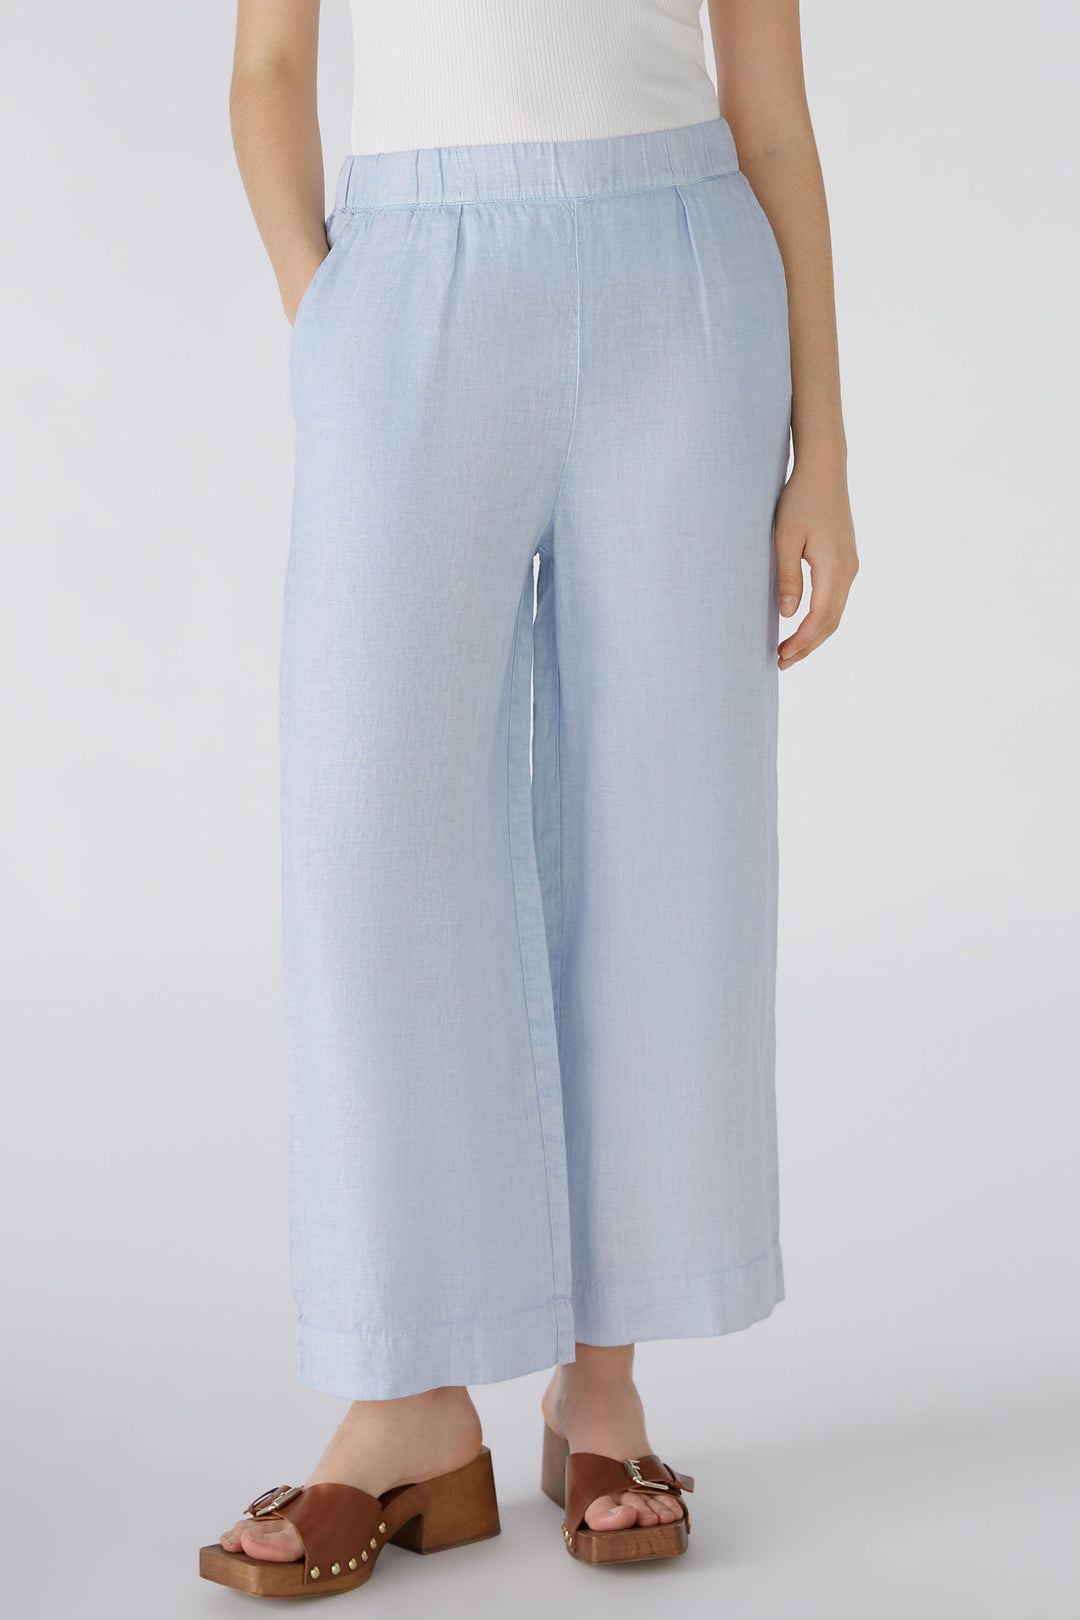 Oui 87581 Light Blue Culotte Wide Leg Pull-On Trousers - Olivia Grace Fashion